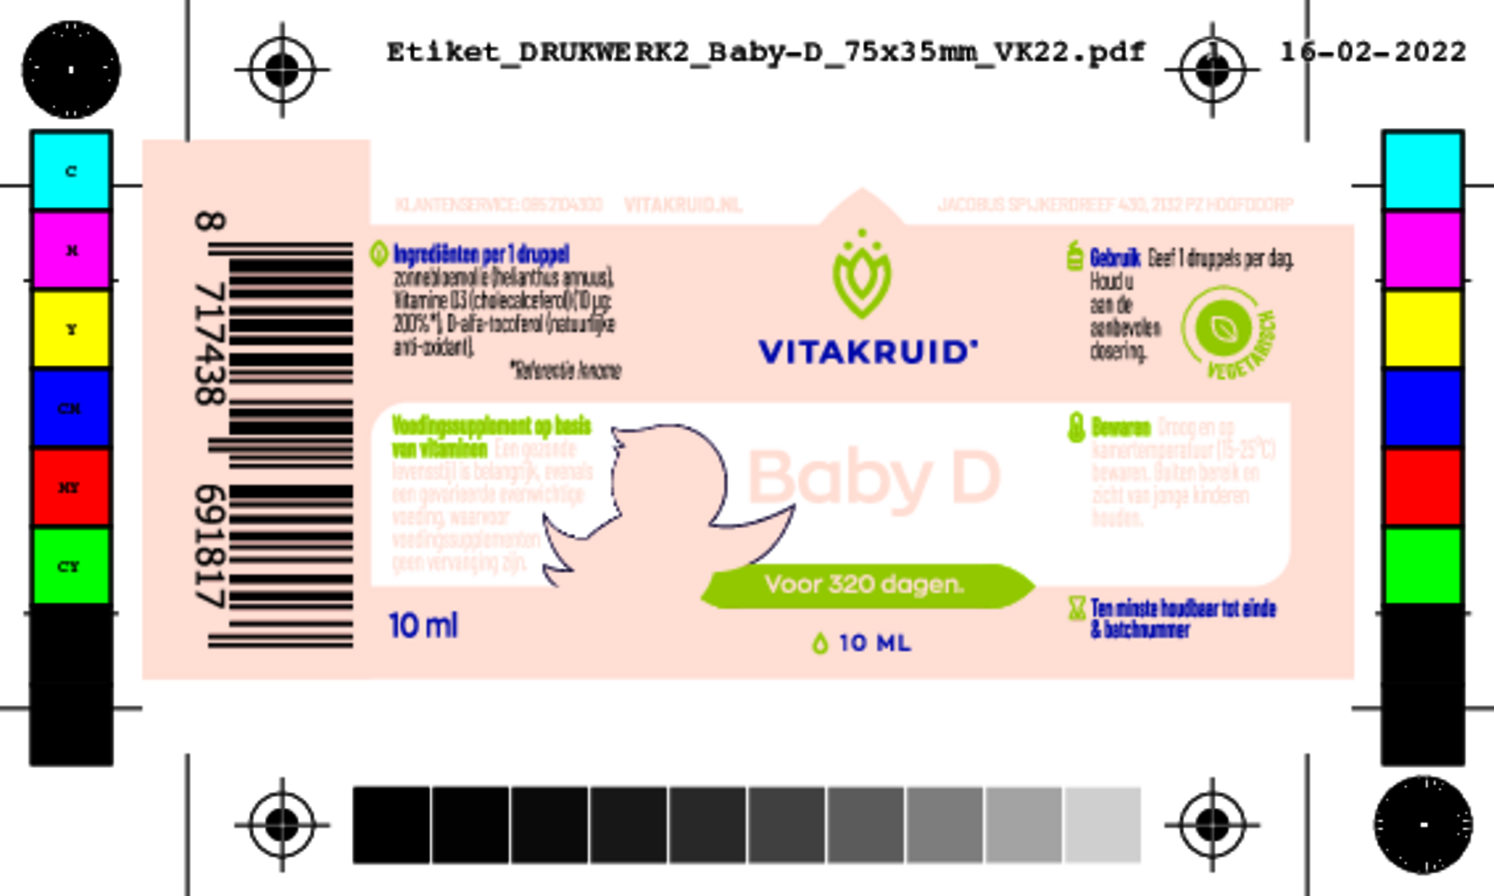 Vitamine K & D Baby afbeelding van document #2, etiket